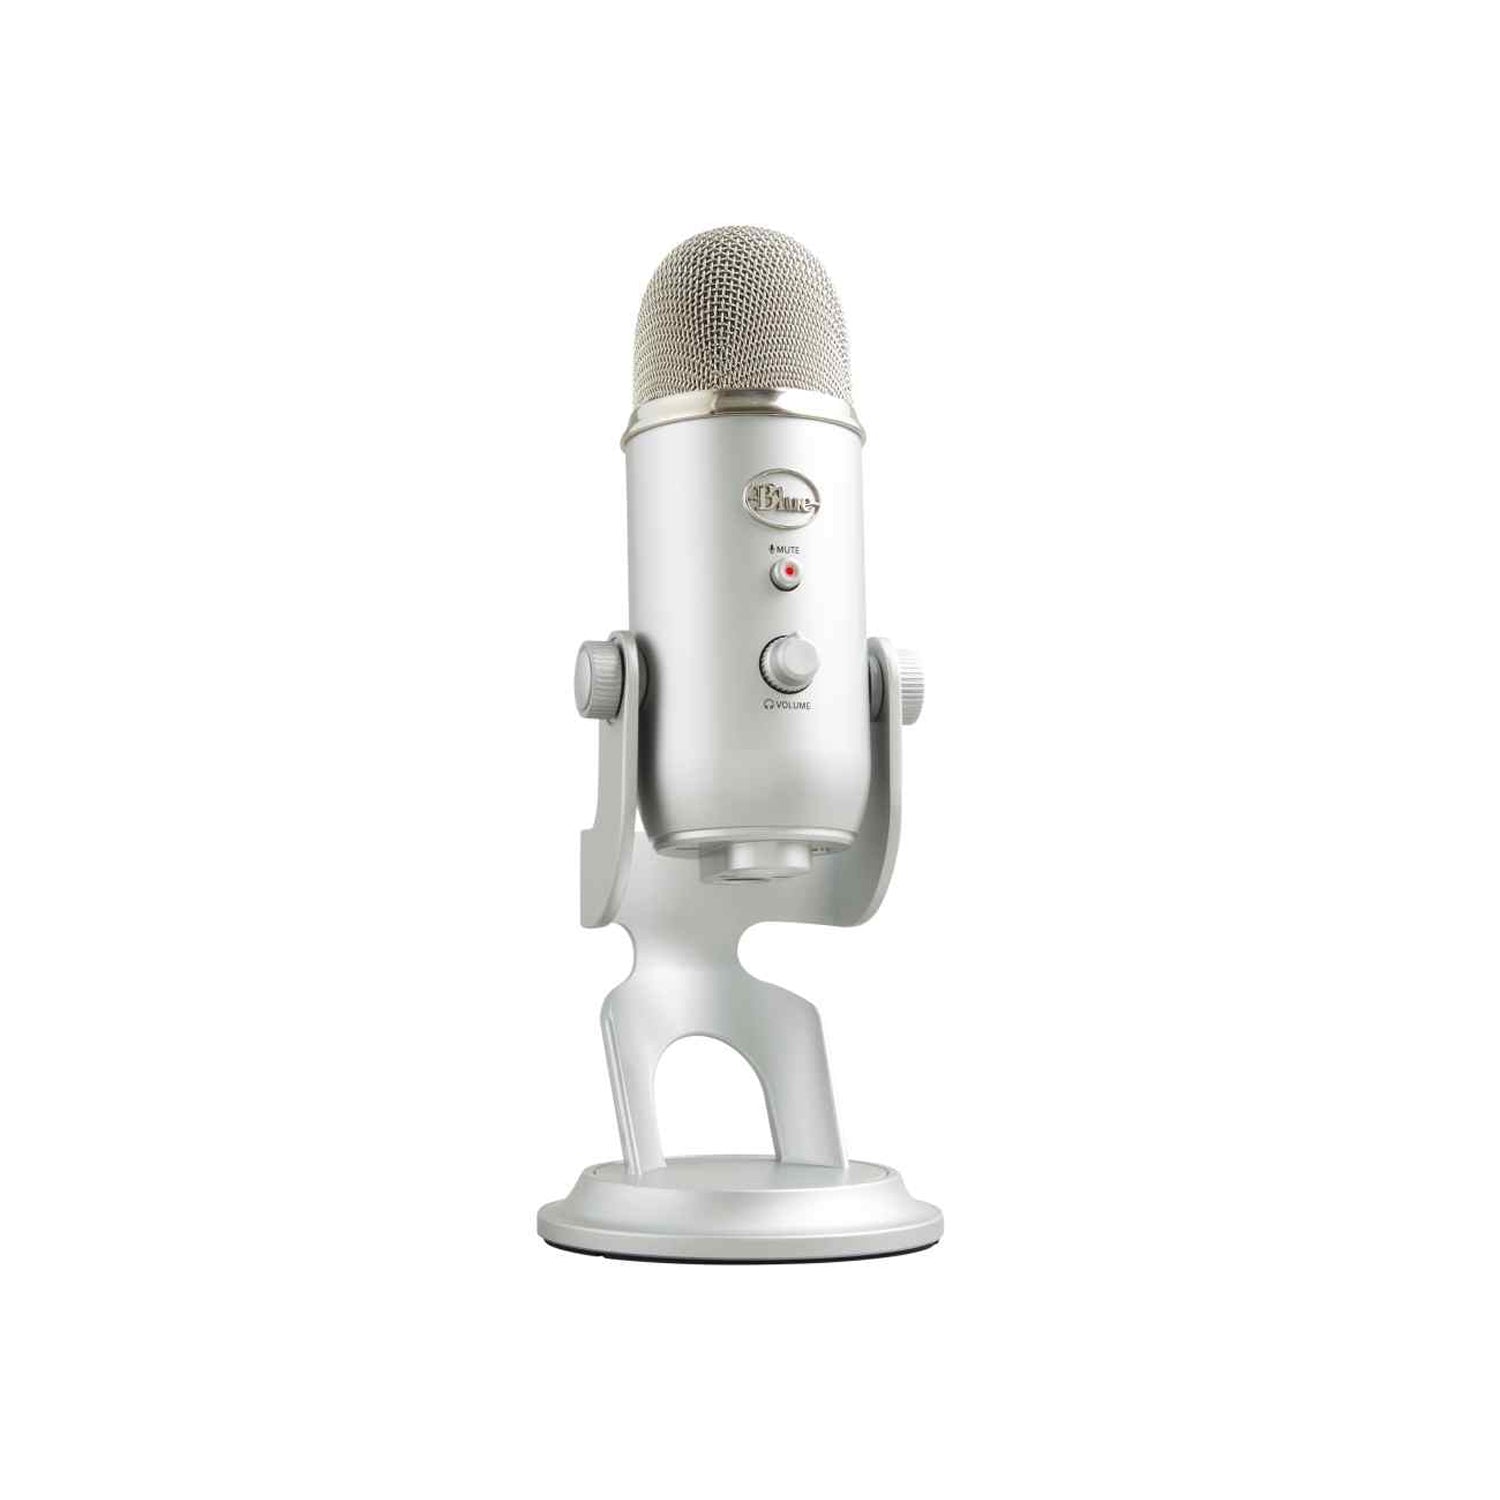 Logitech Blue Yeti Premium Multi-Pattern USB Microphone